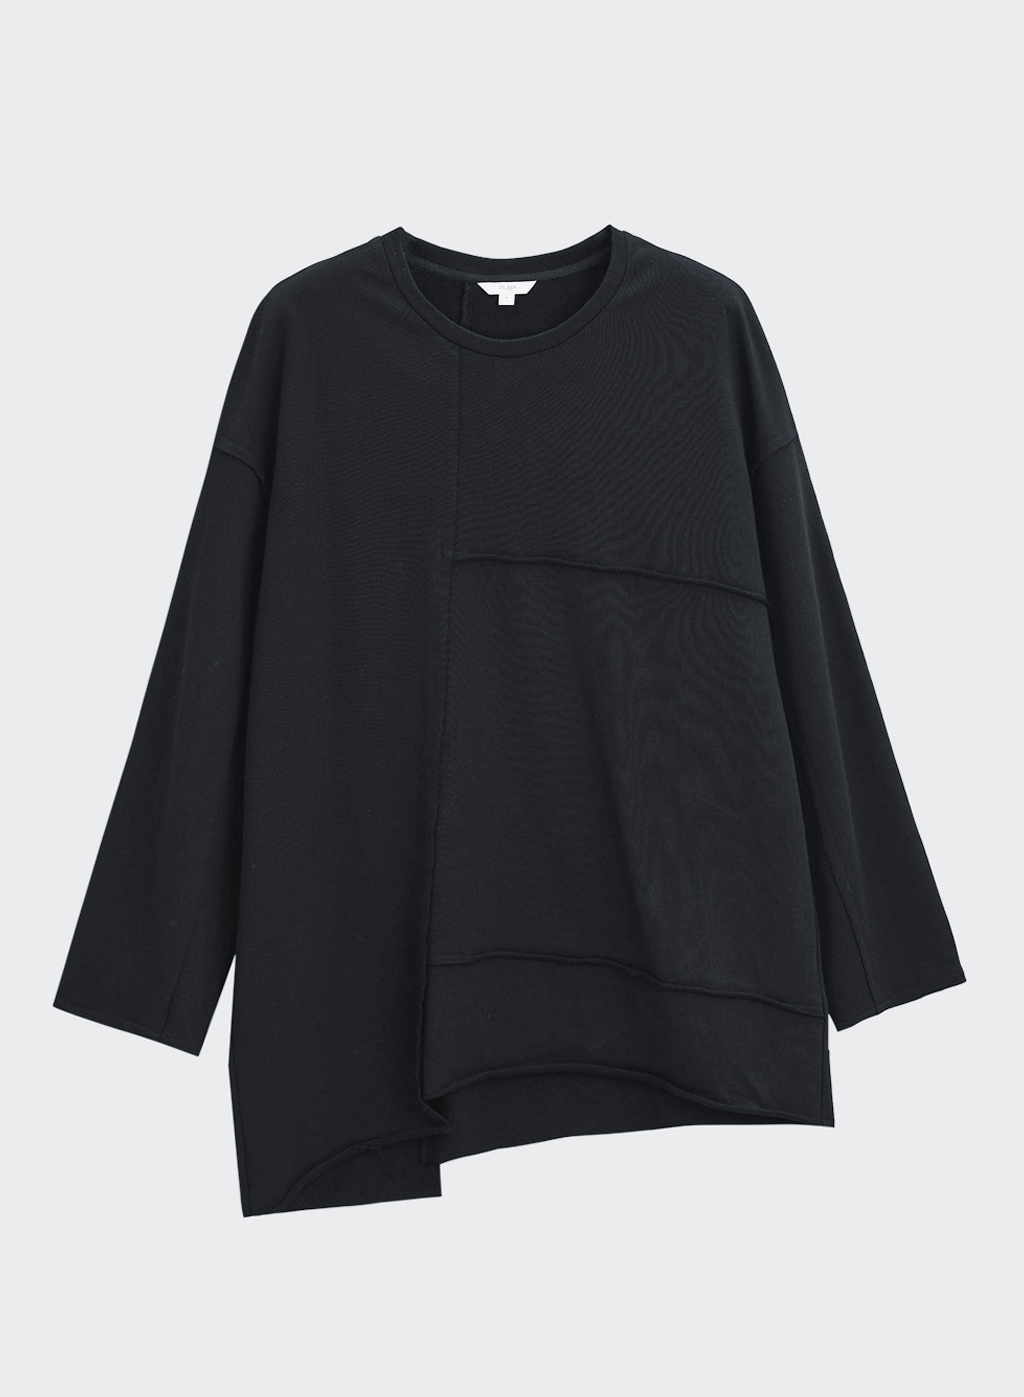 black sweatshirt